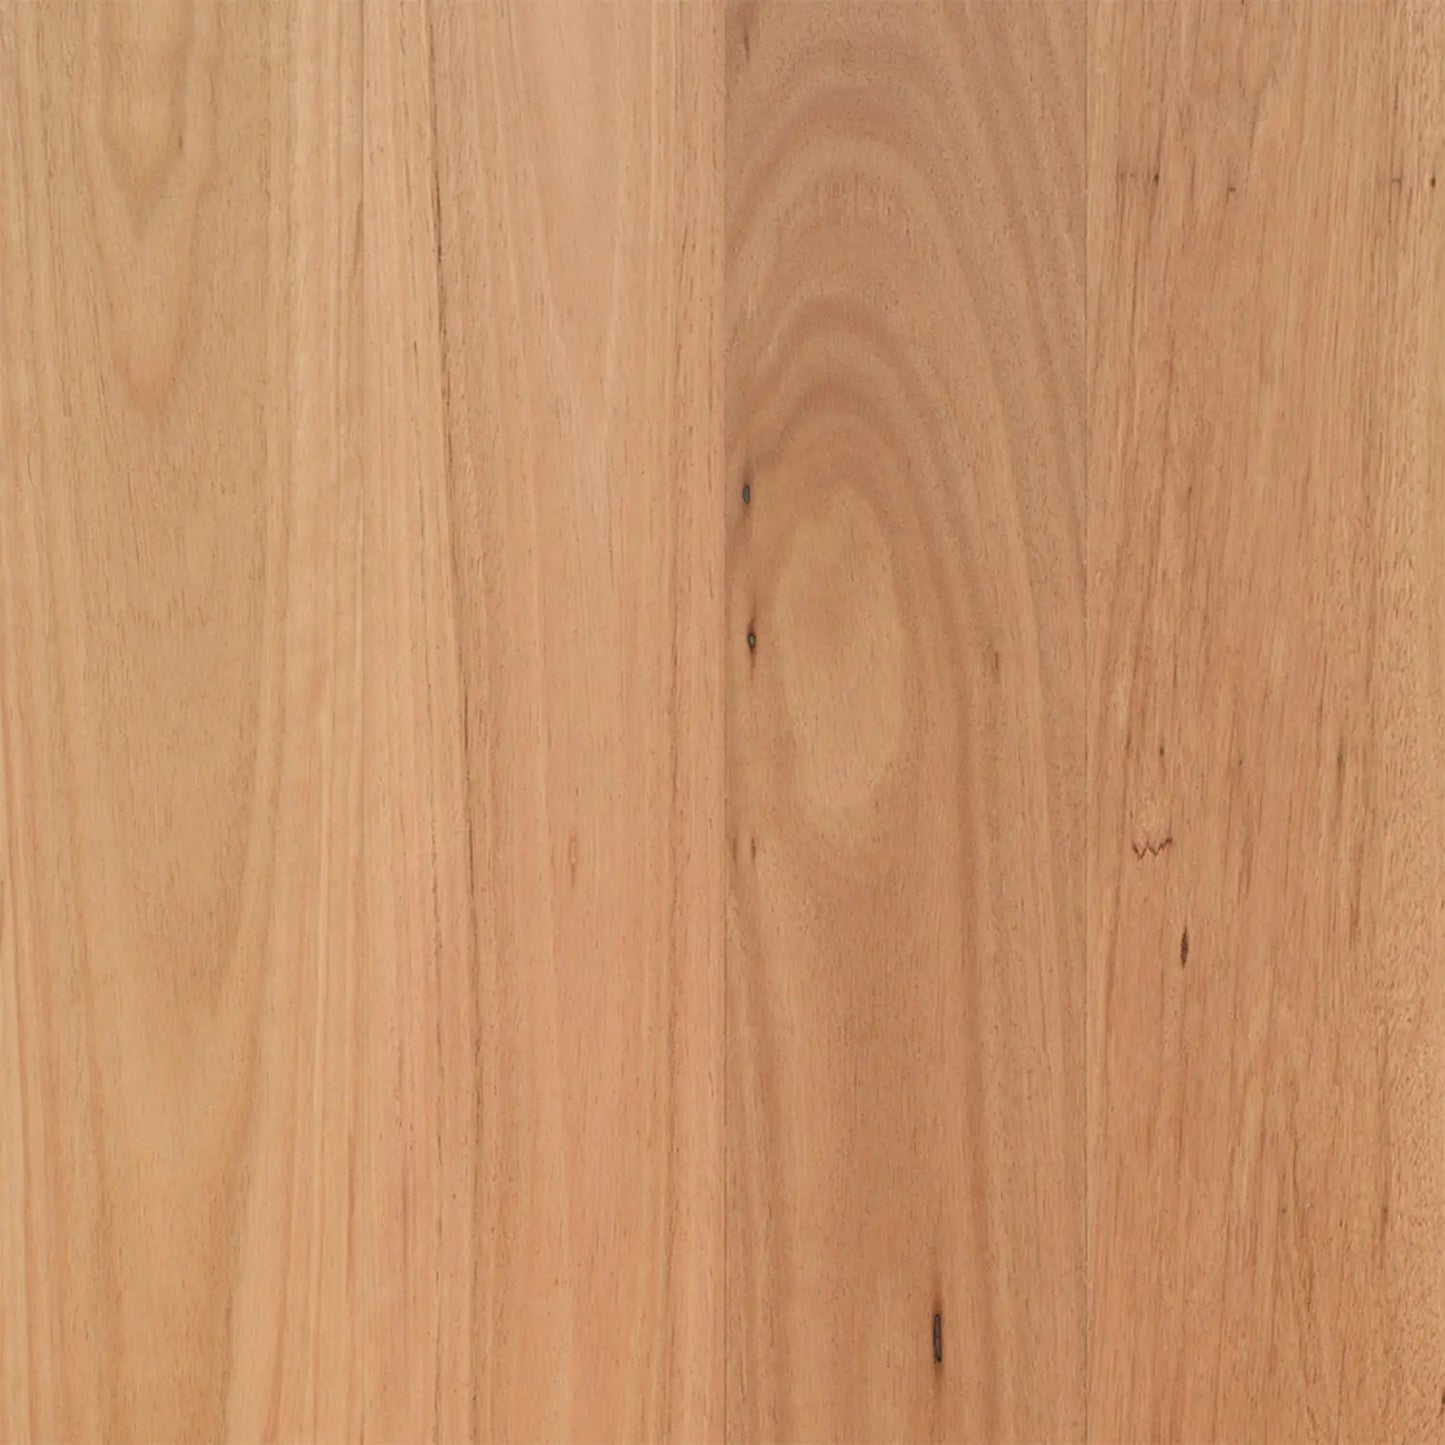 Coastal Blackbutt Opulence Native Timber Flooring Australian Select Timbers